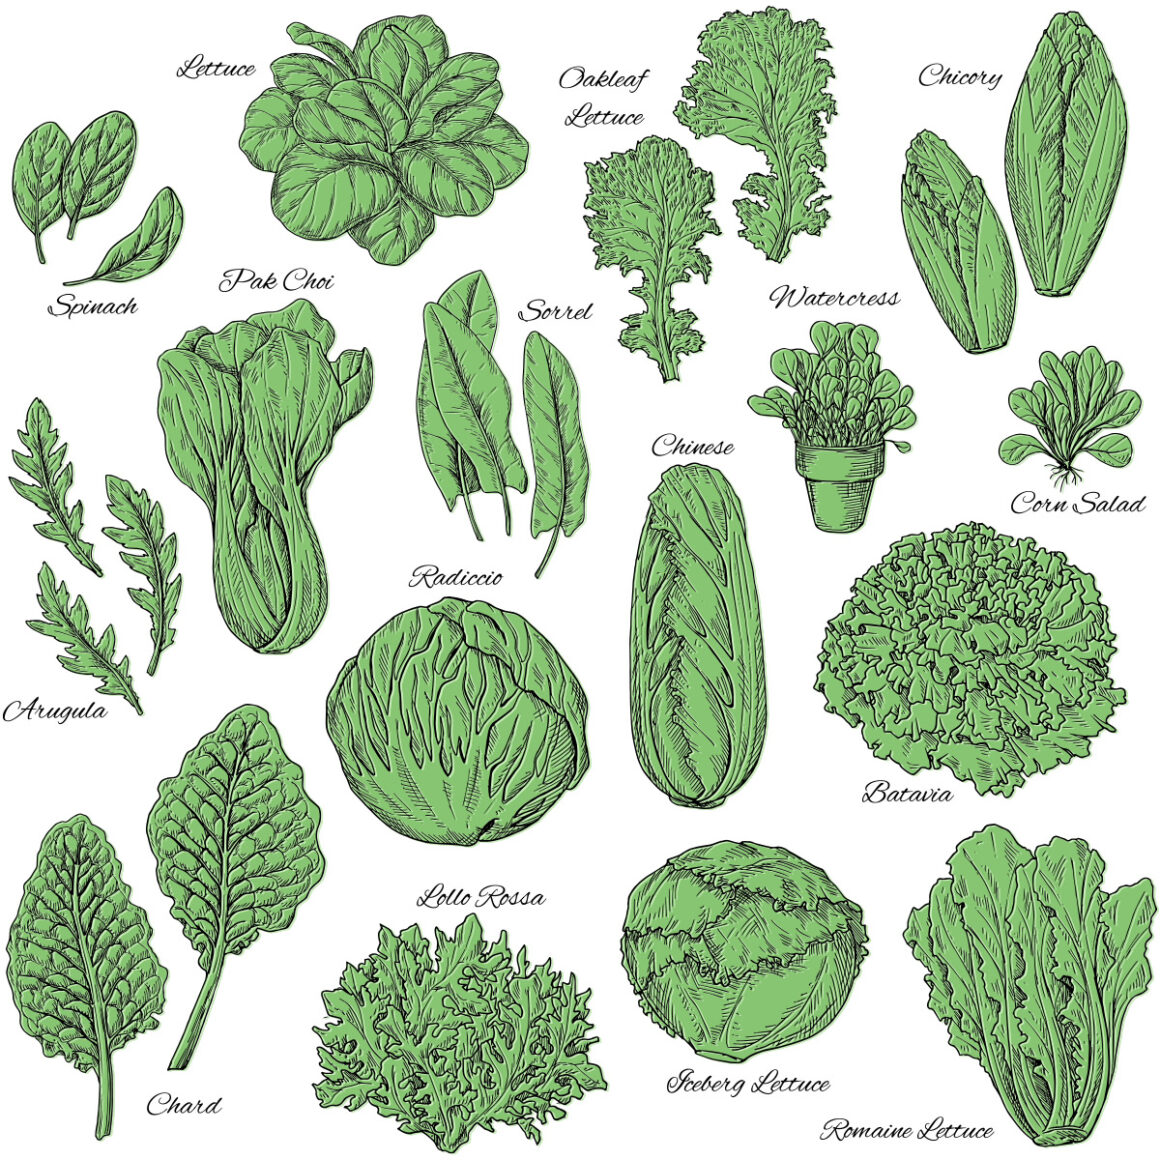 Various types of salad greens